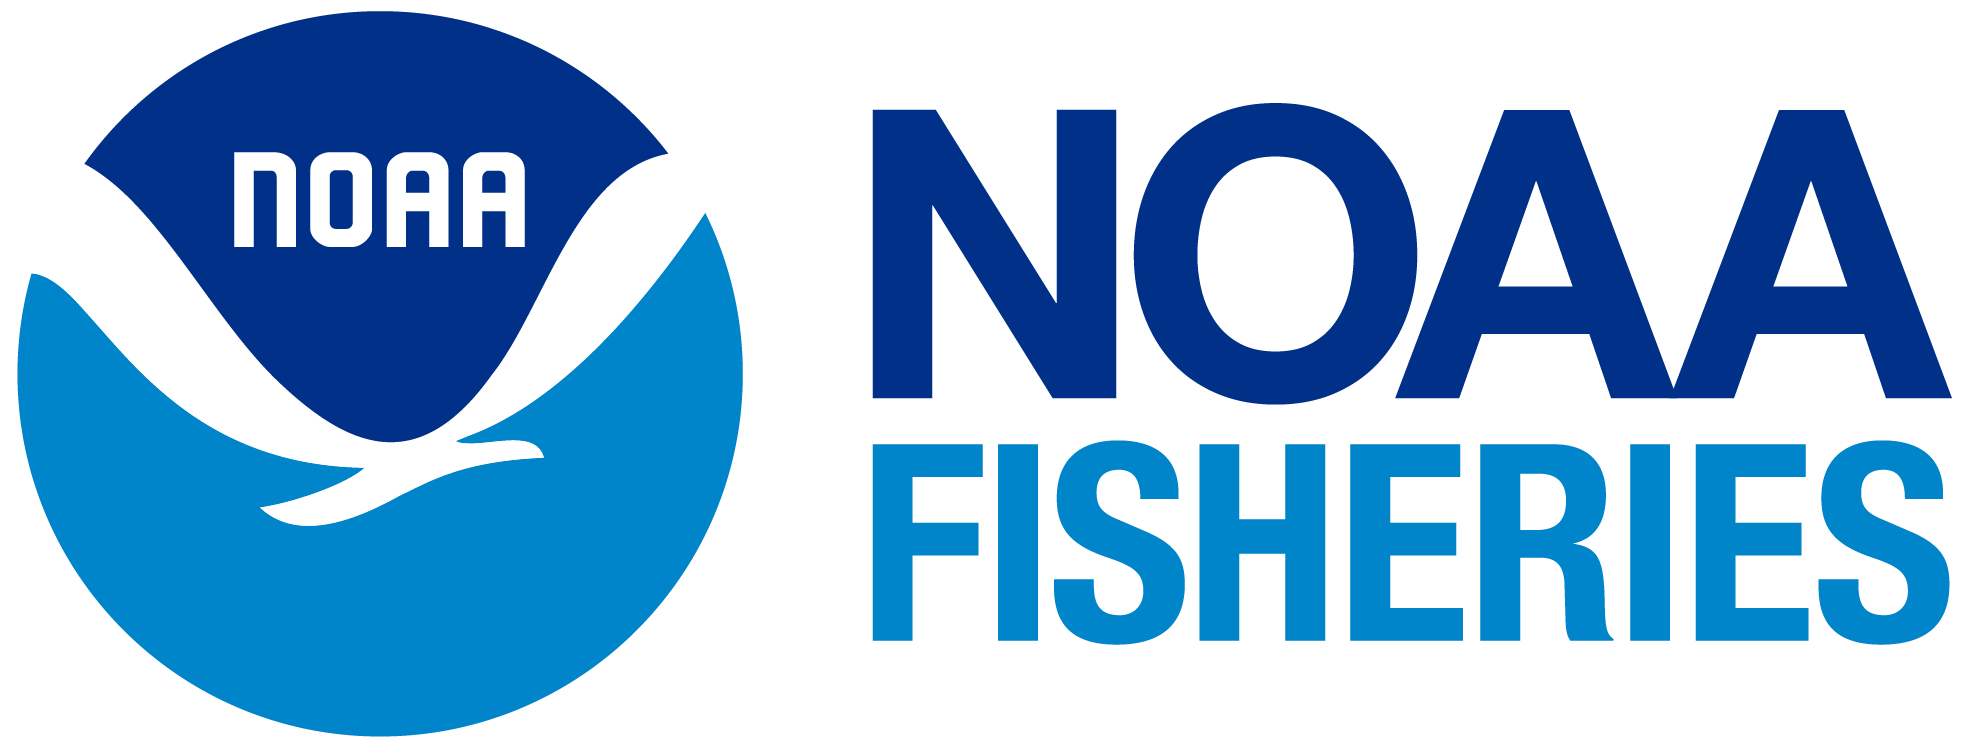 NOAA_fisheries_logo